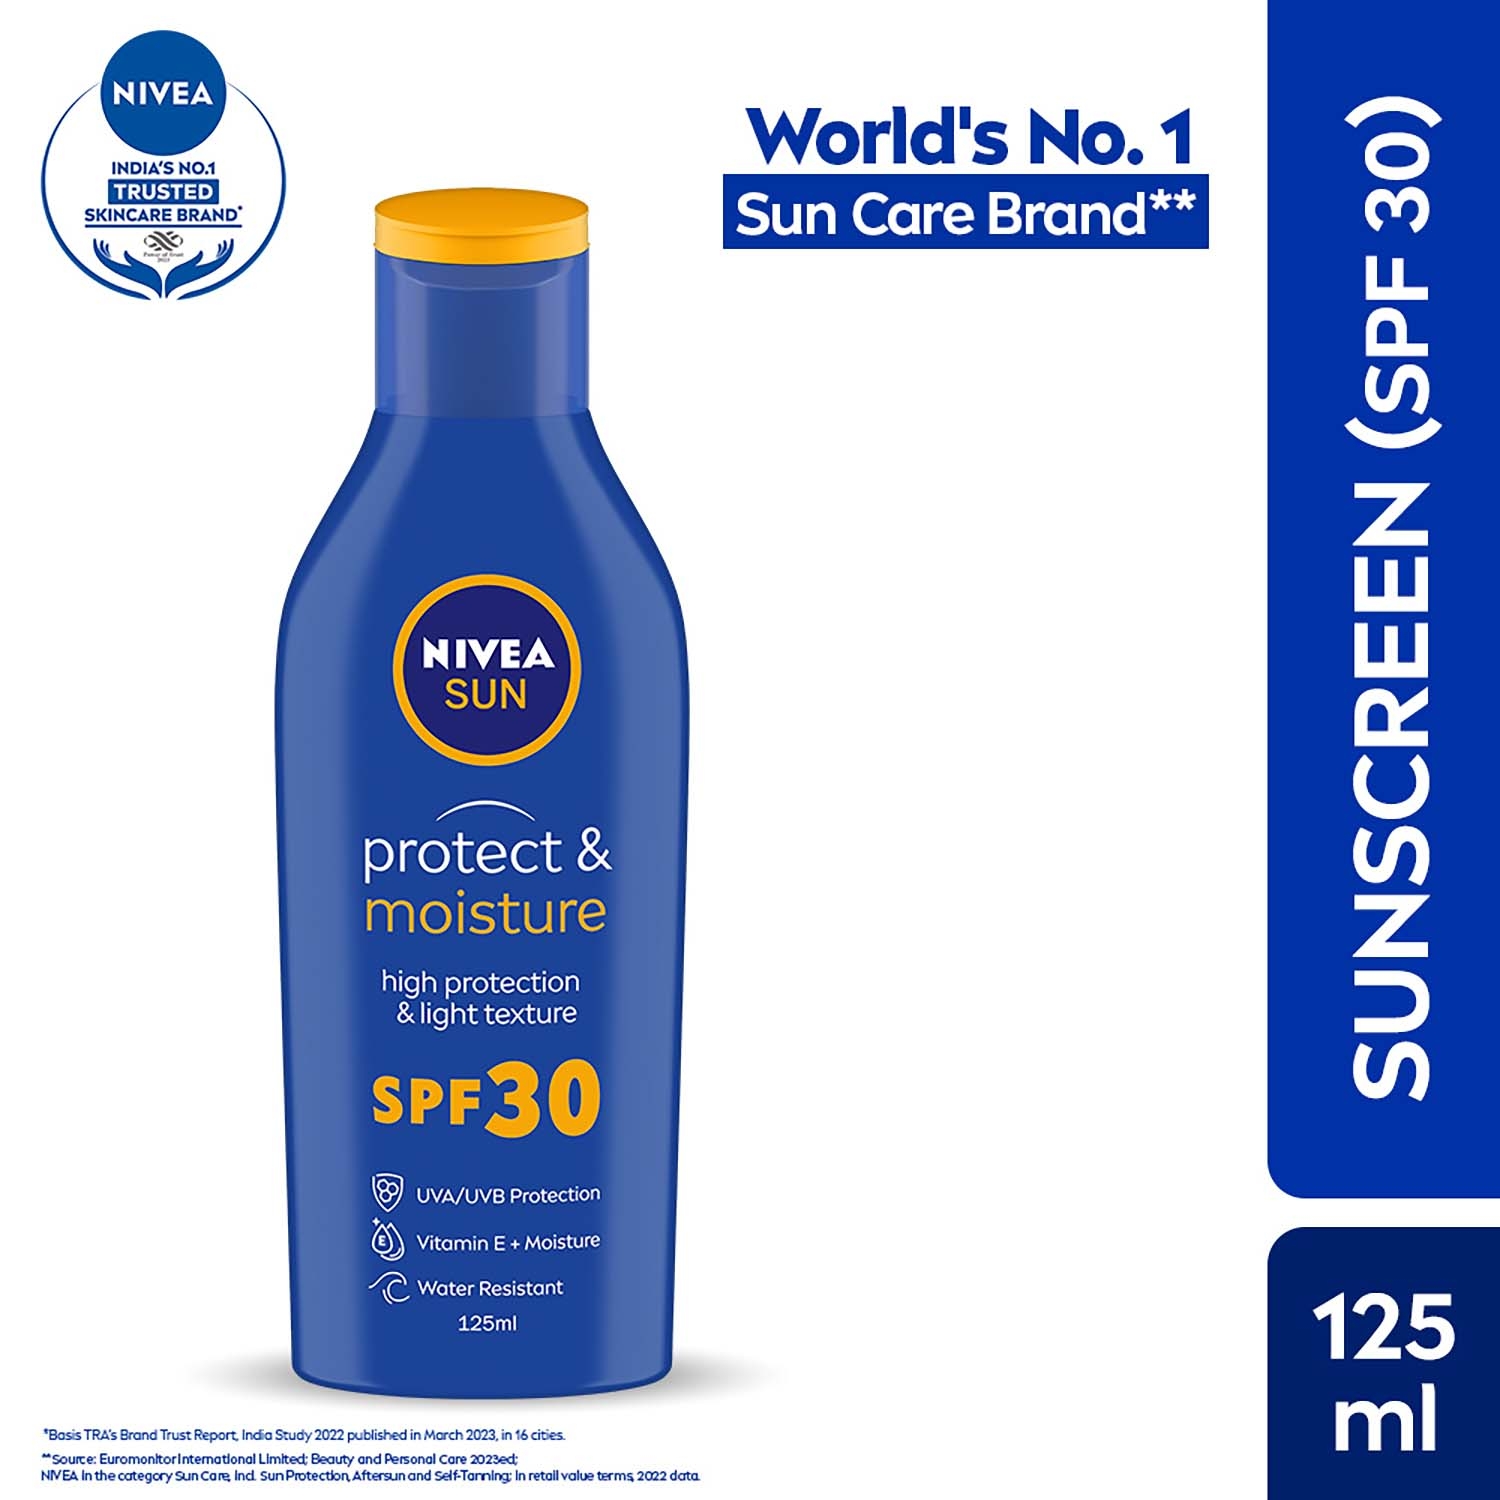 Nivea | Nivea Sunprotect Moisture High Protection & Light Texture SPF 30 (125ml)